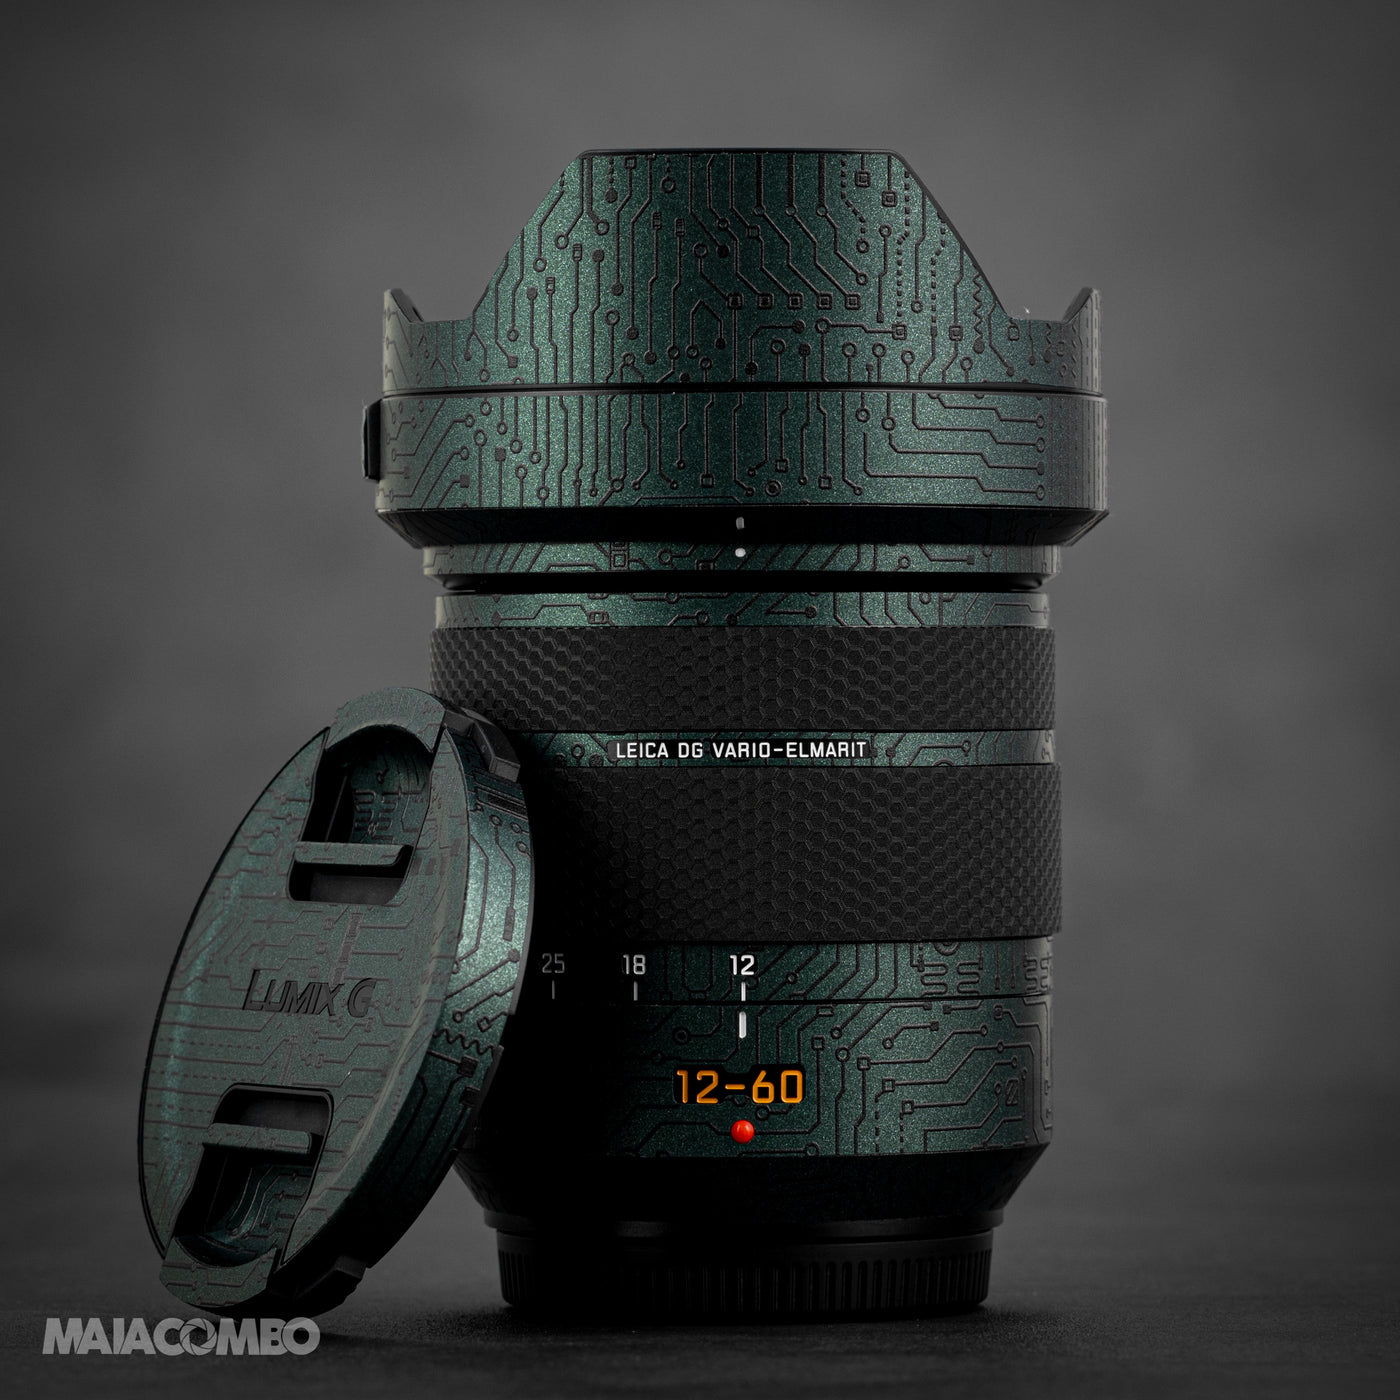 Panasonic Leica DG Vario-Elmarit 12-60mm f2.8-4 Lens Skin